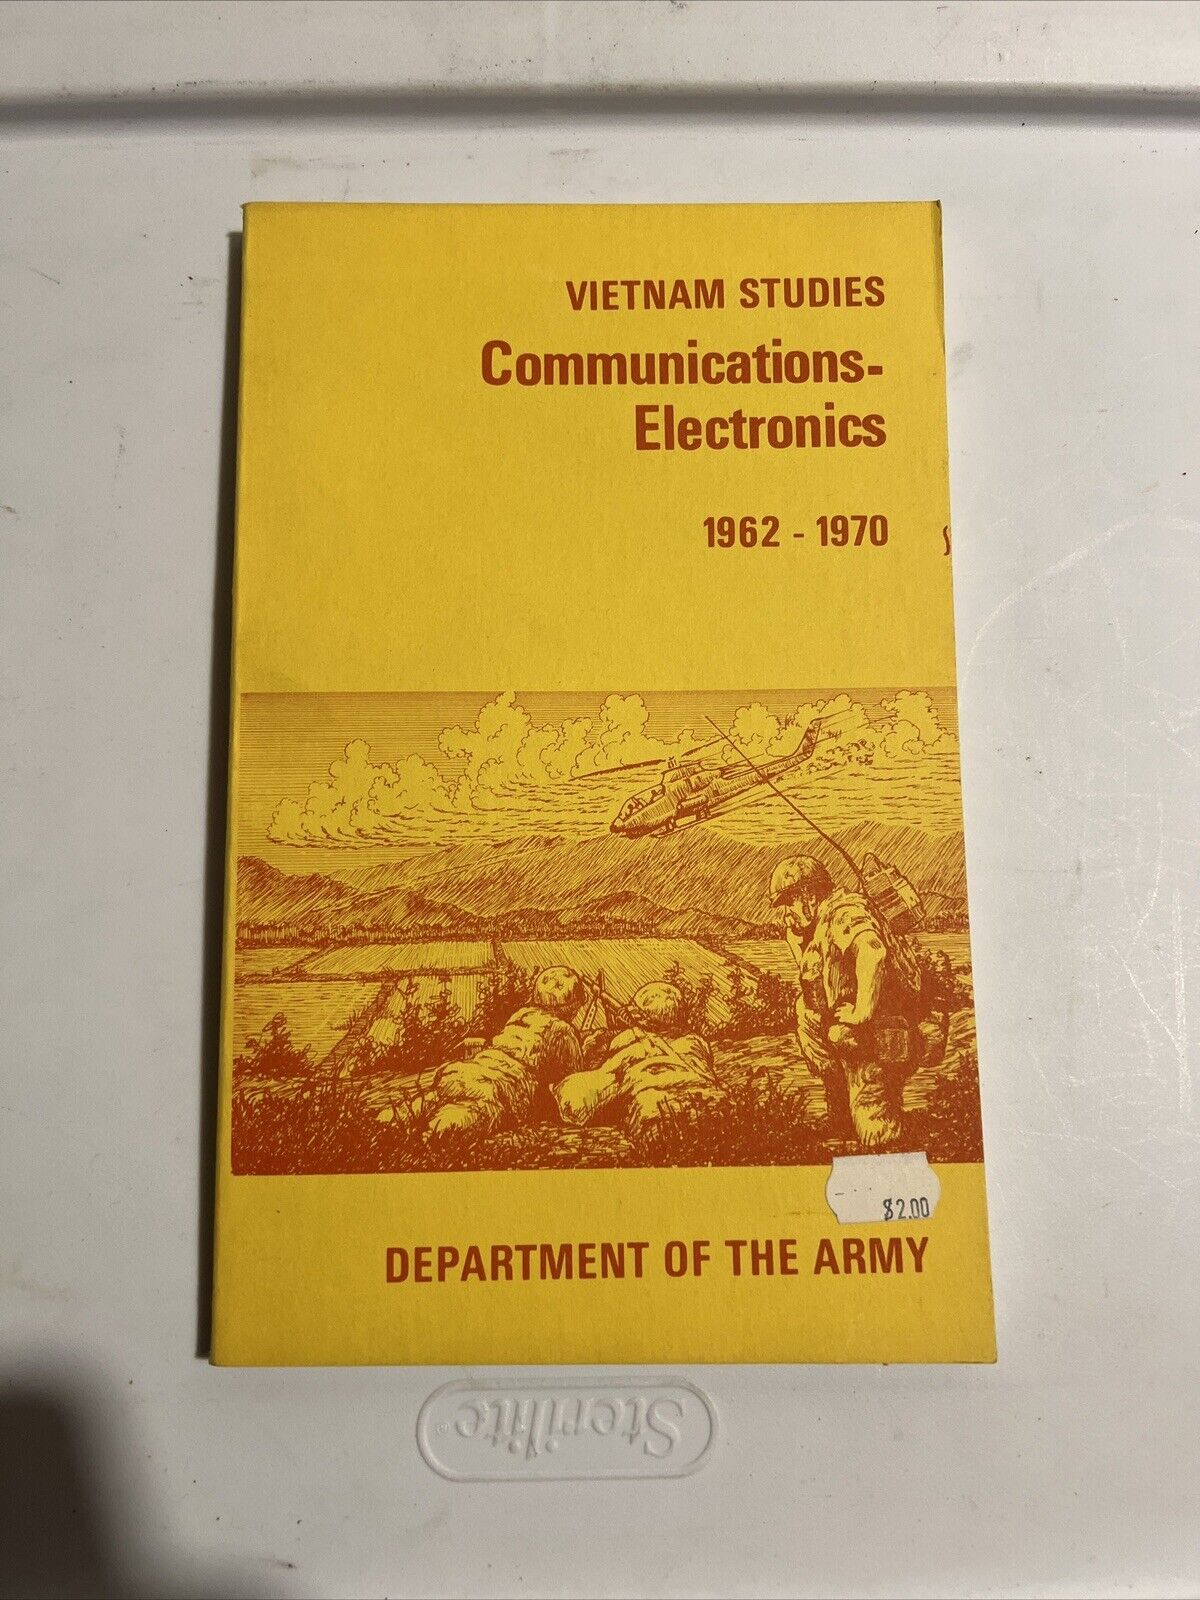 Vietnam Studies Communications - Electronics 1962-1970 Book, Dep. Of Army, 1972